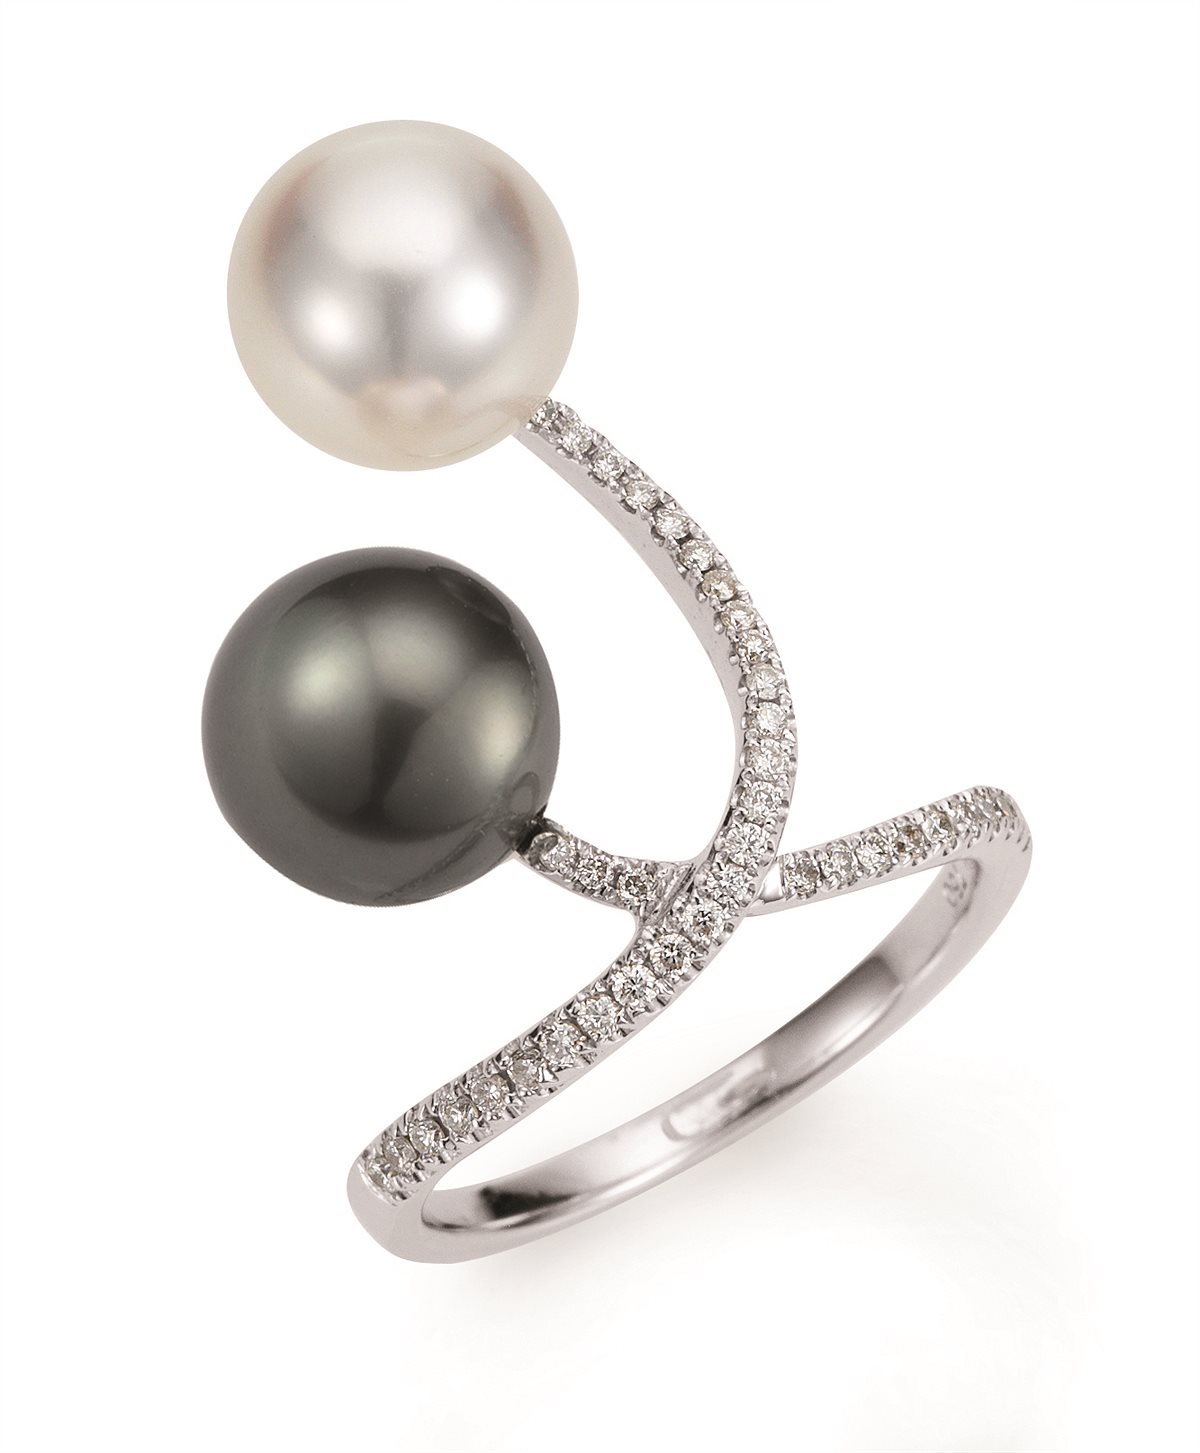 Juwelier Kruzik_YANA NESPER_APPASIONATA_Ring_Preis auf Anfrage_04